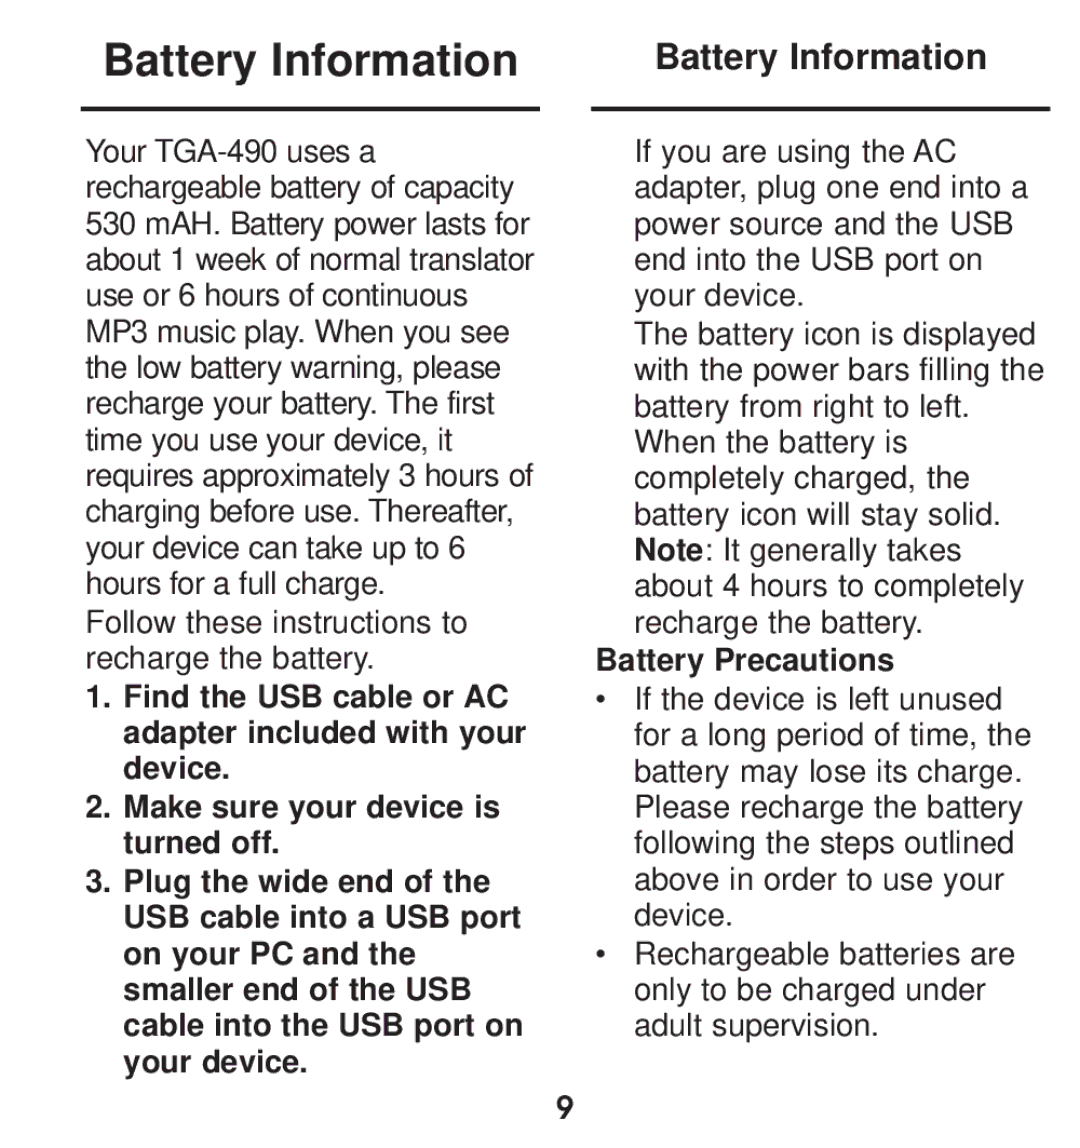 Franklin TGA-490 manual Battery Information, Battery Precautions 